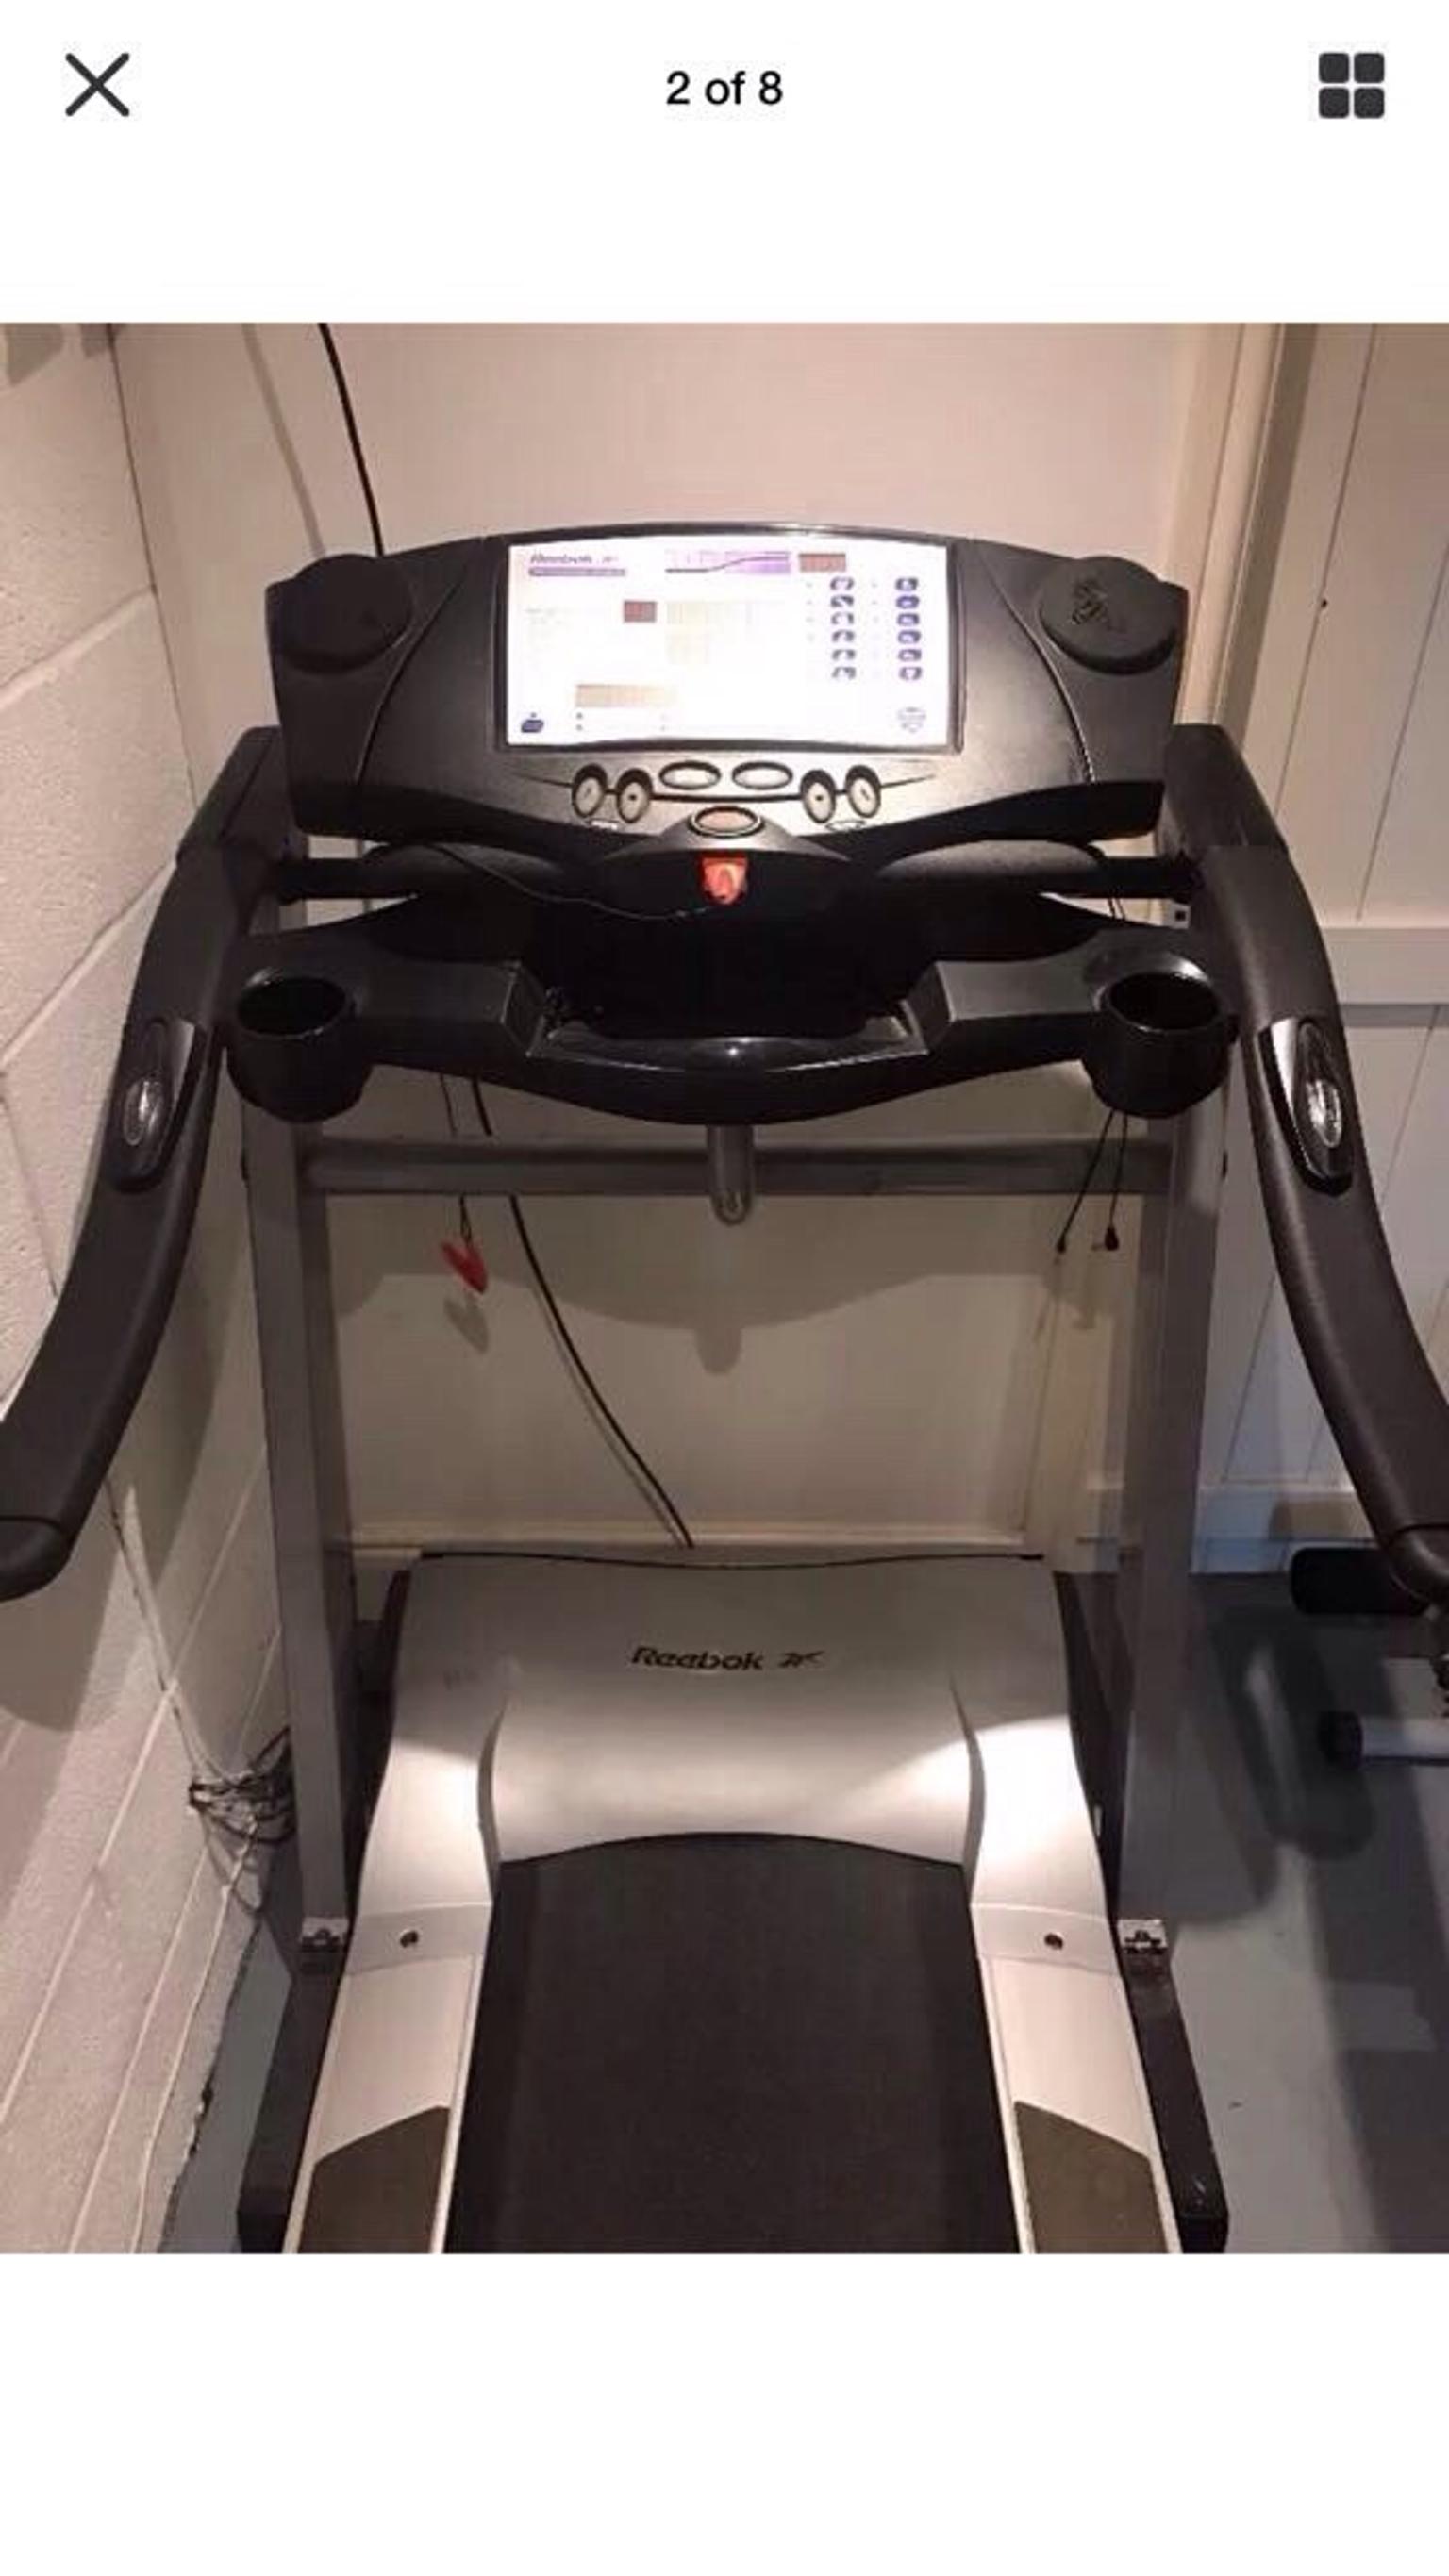 reebok tr5 premier run treadmill manual